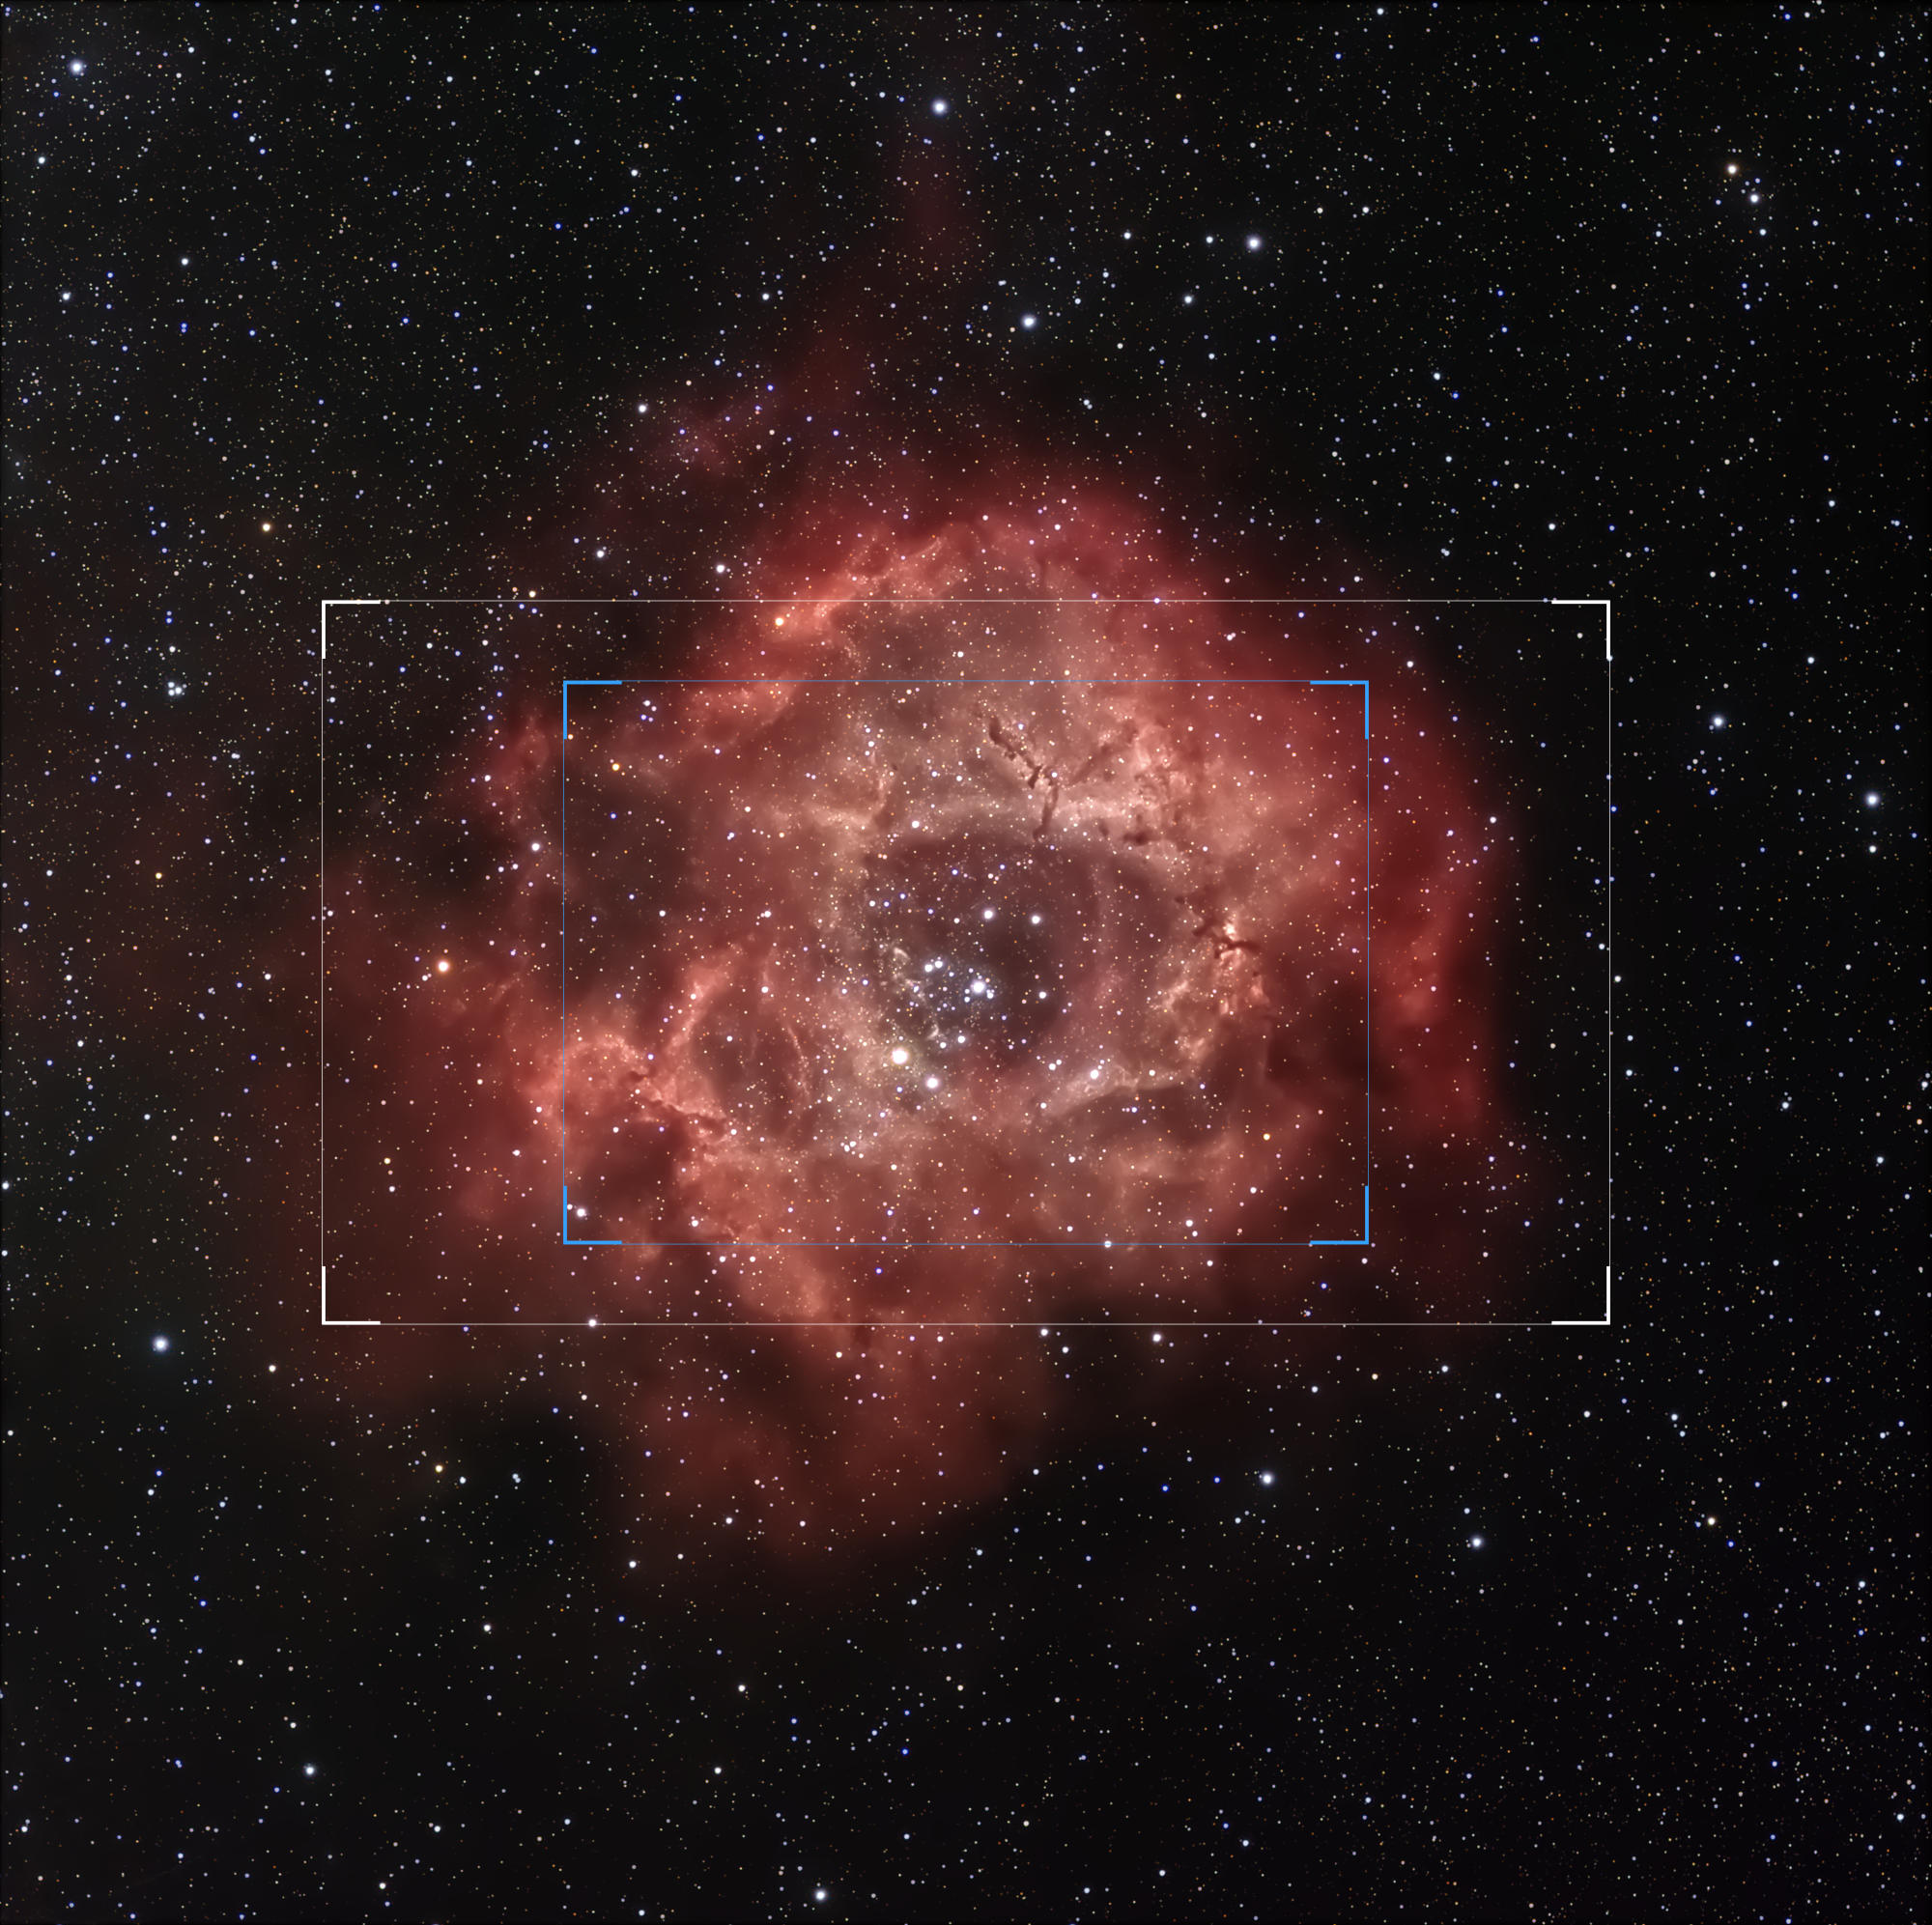 Rosette Nebula premier "mode panorama" jamais intégré à un télescope